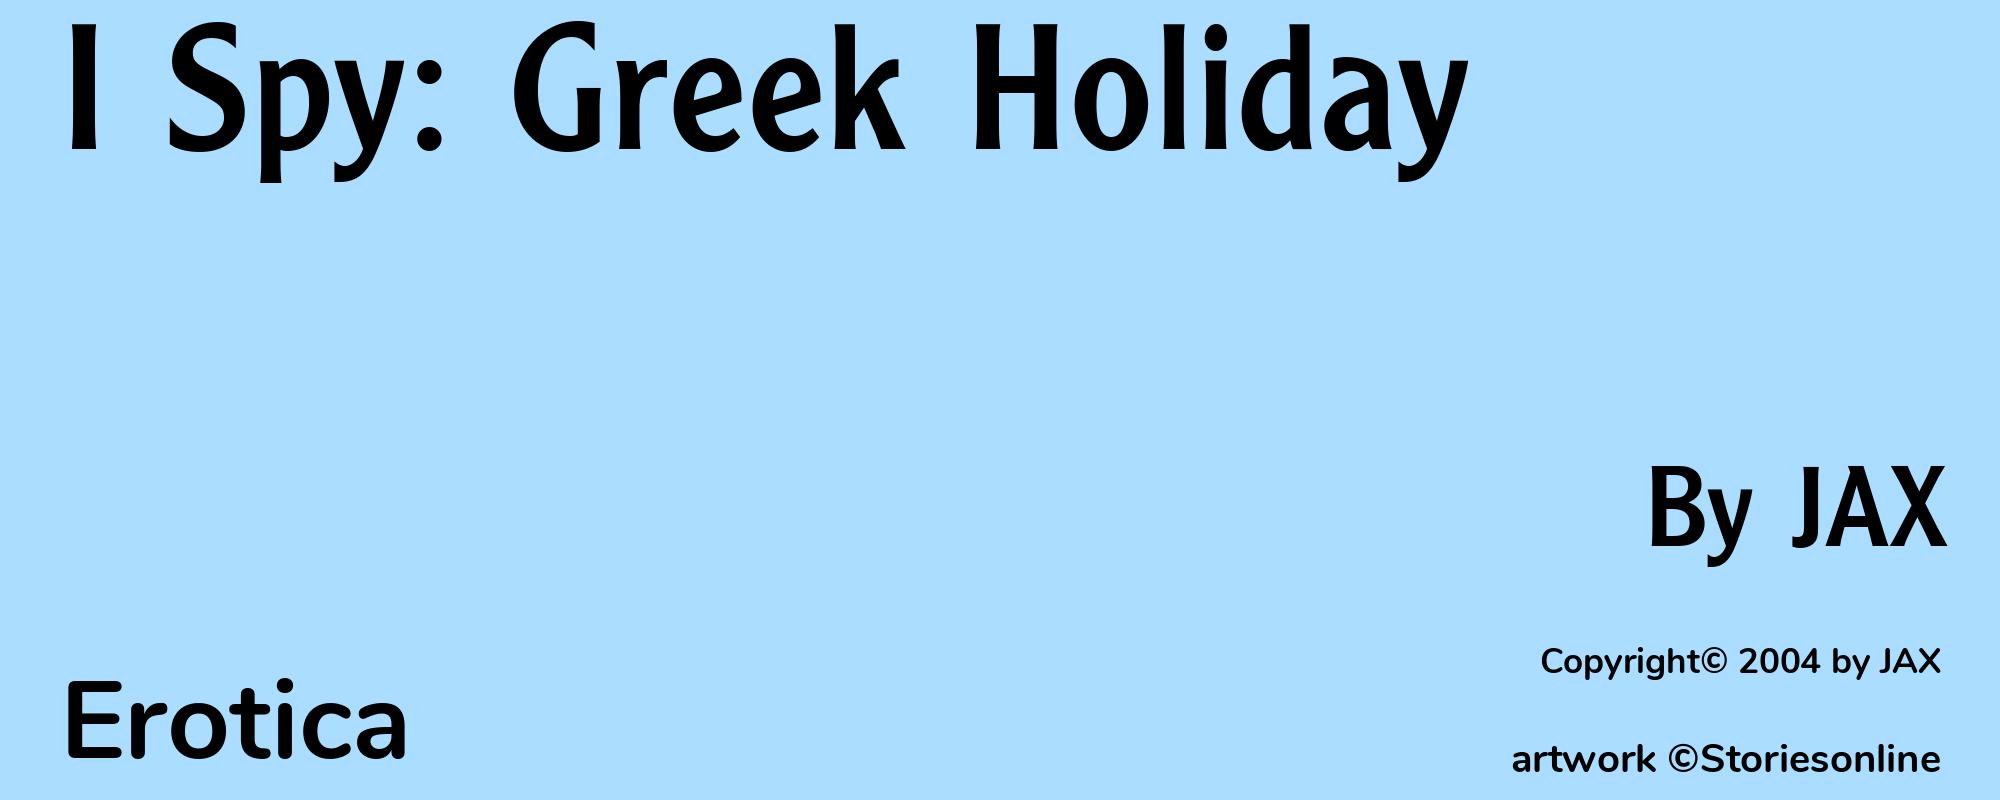 I Spy: Greek Holiday - Cover